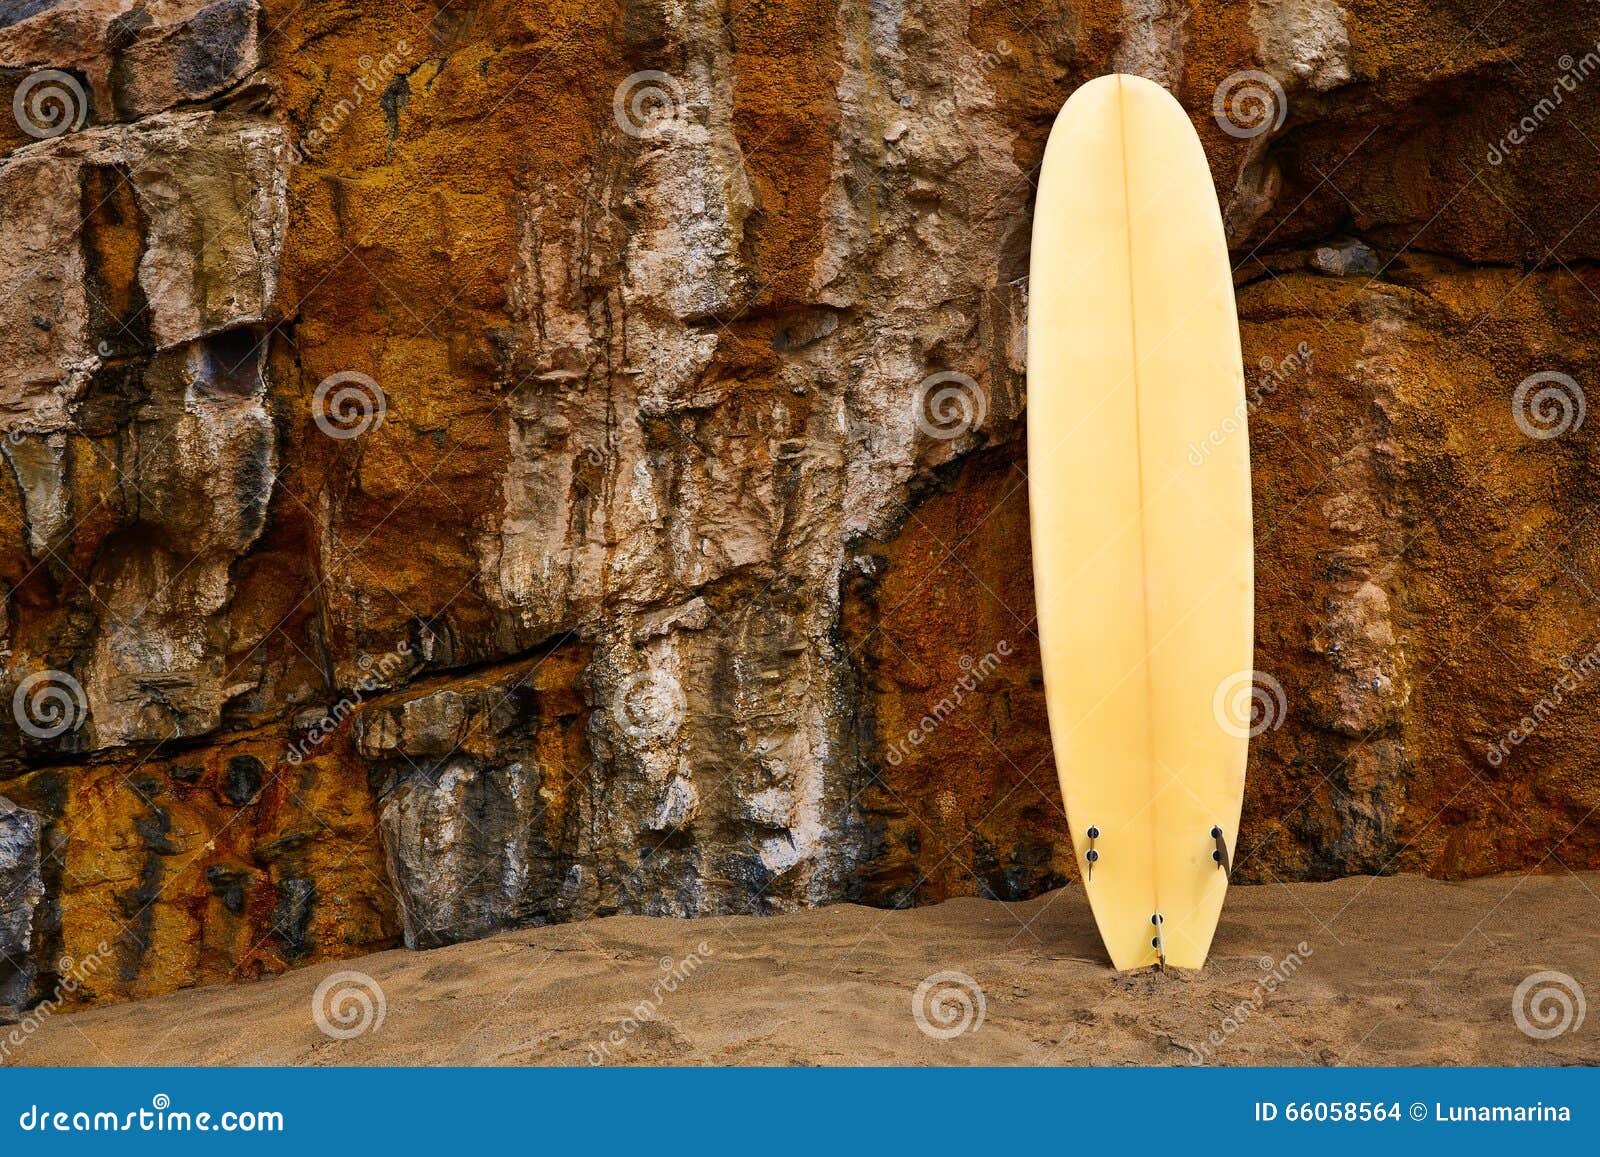 fuerteventura la pared beach surfboard